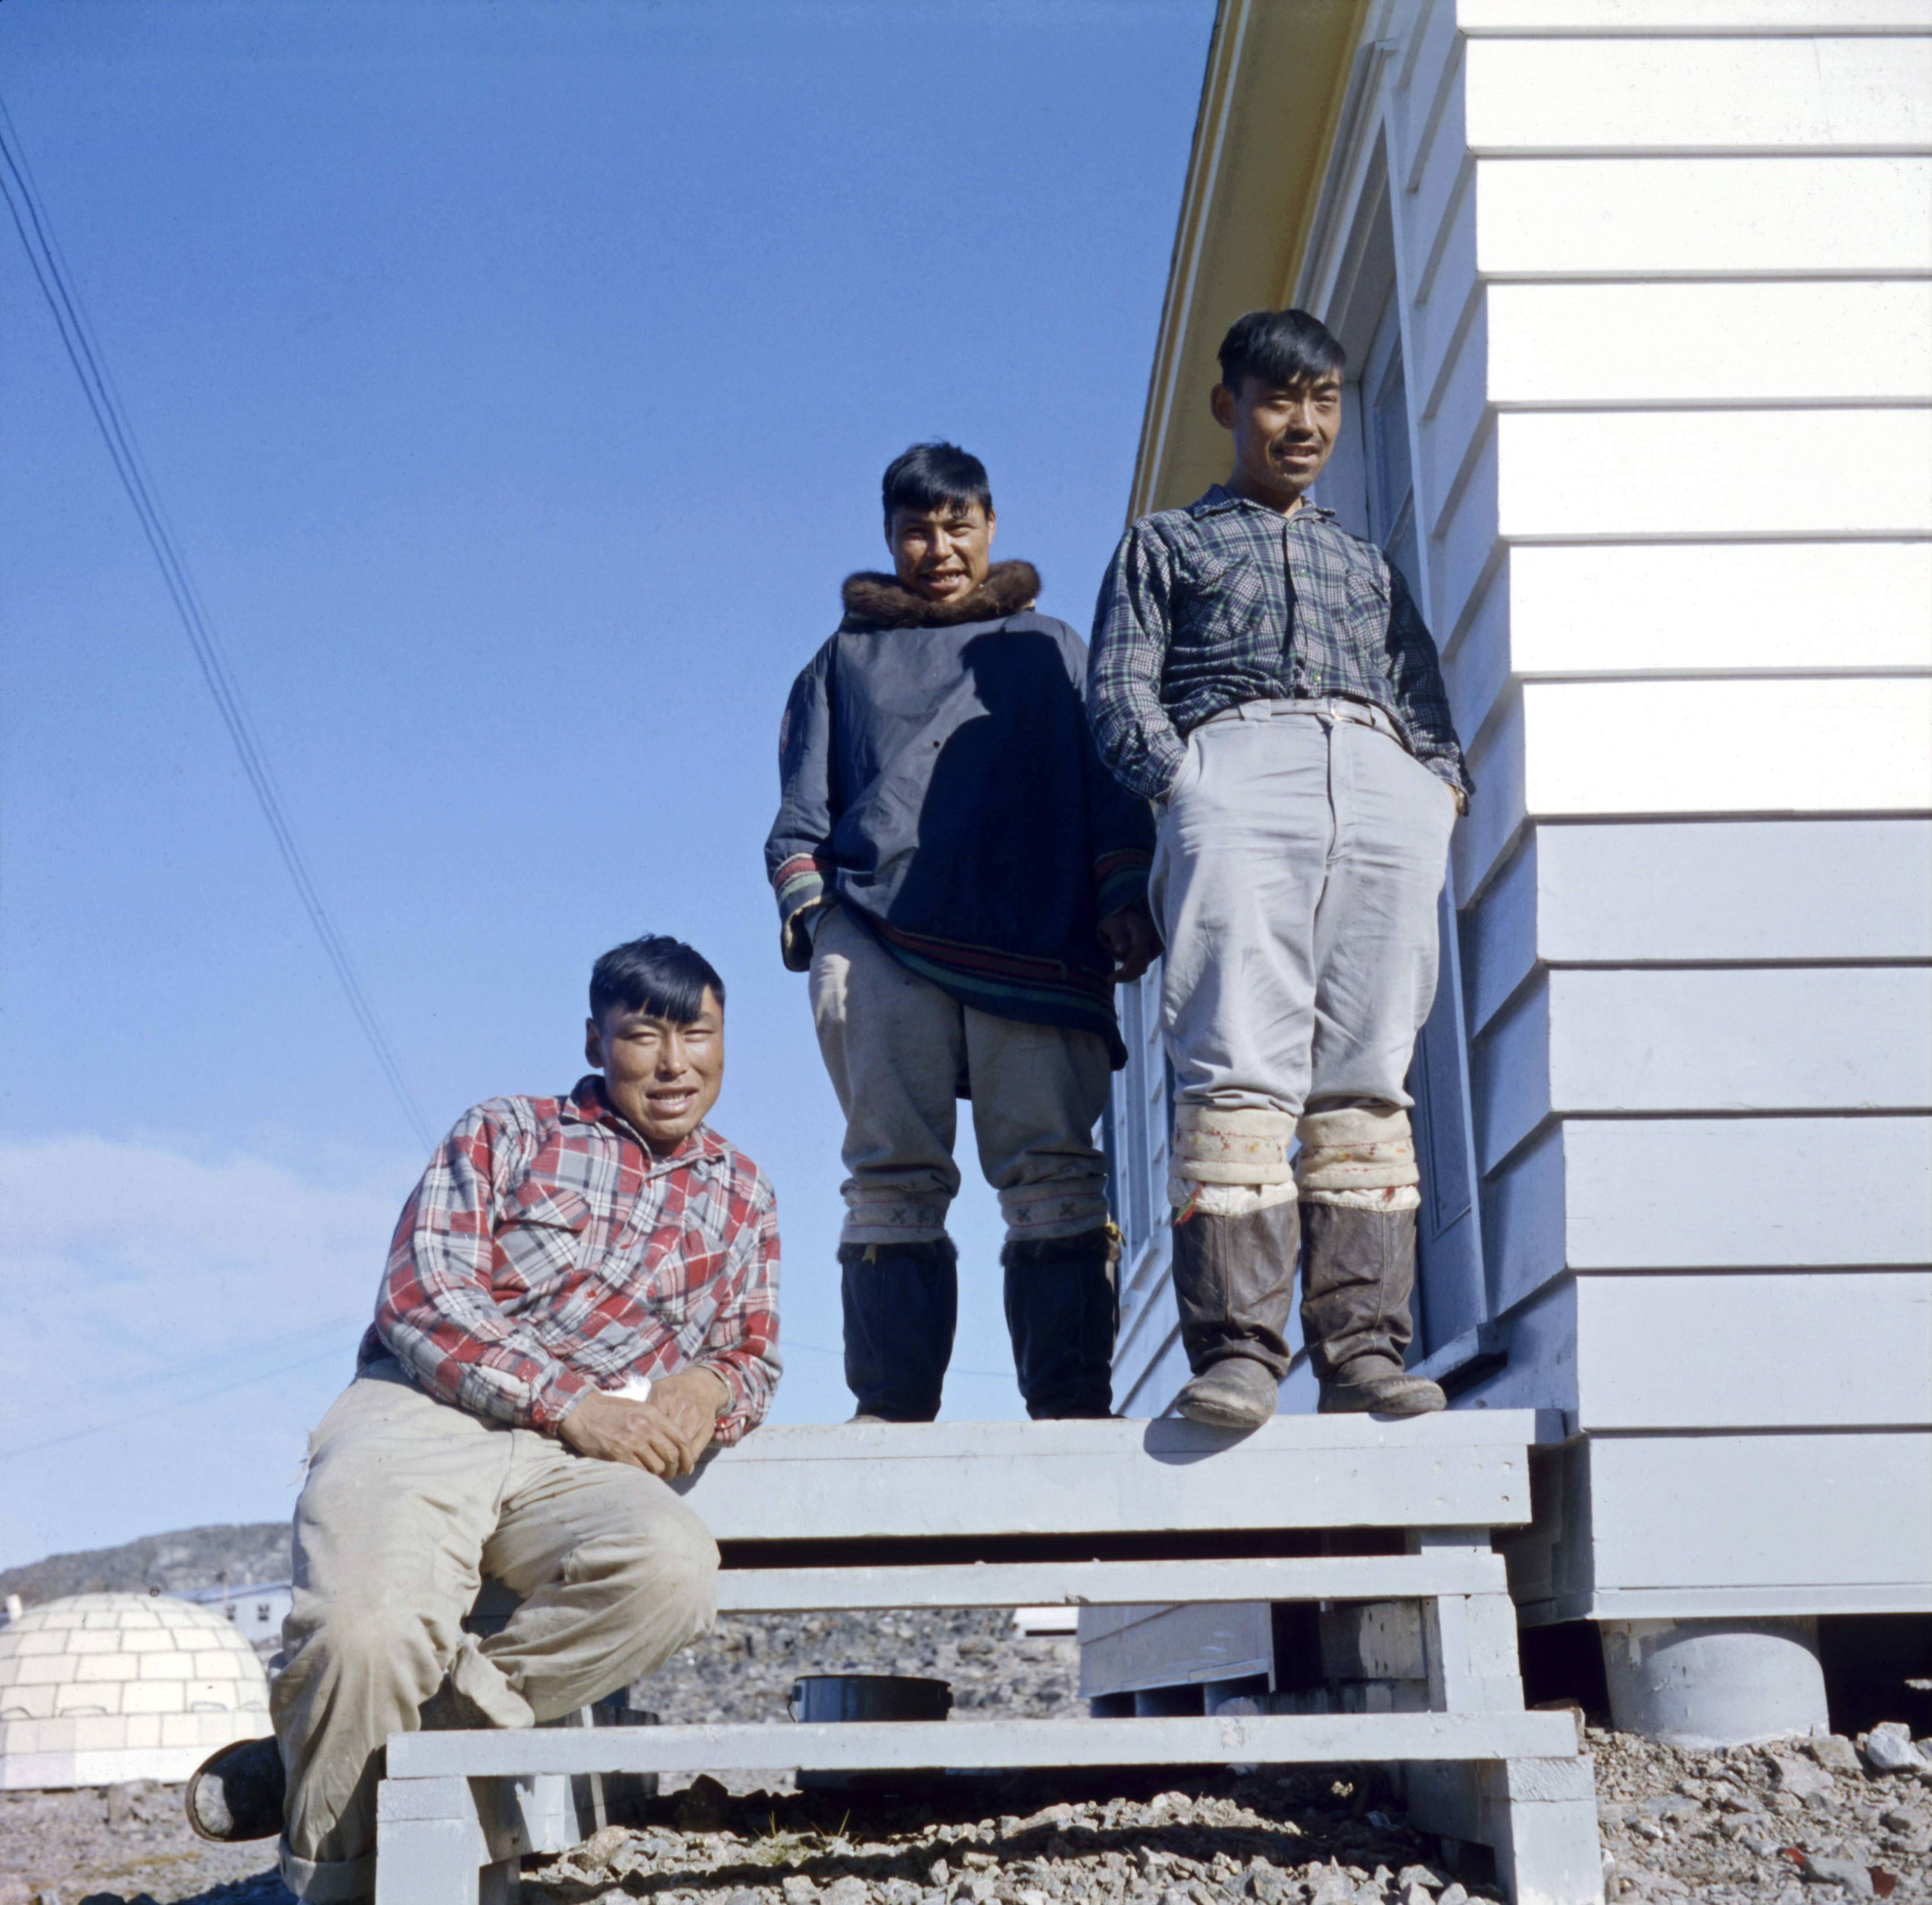 1.	Artists (left to right): Eegyvudluk Pootoogook, Iyola Kingwatsiak and Lukta Qiatsuk (Inuit), Cape Dorset, c. 1960. (Rosemary Eaton) © Libraries and Archives Canada